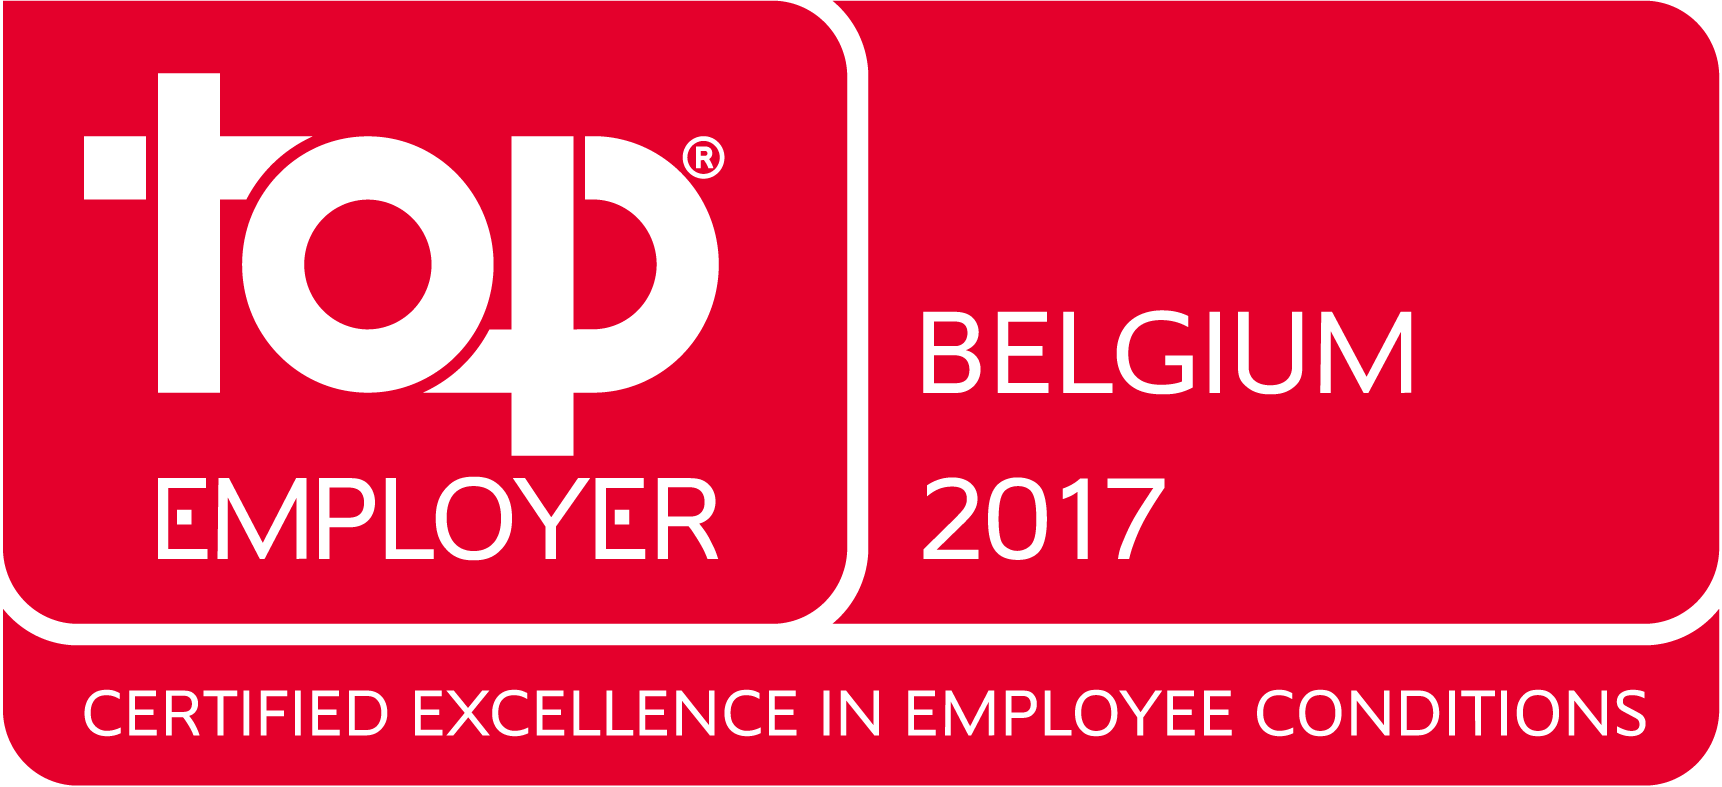 Top Employer Belgium 2017 logo